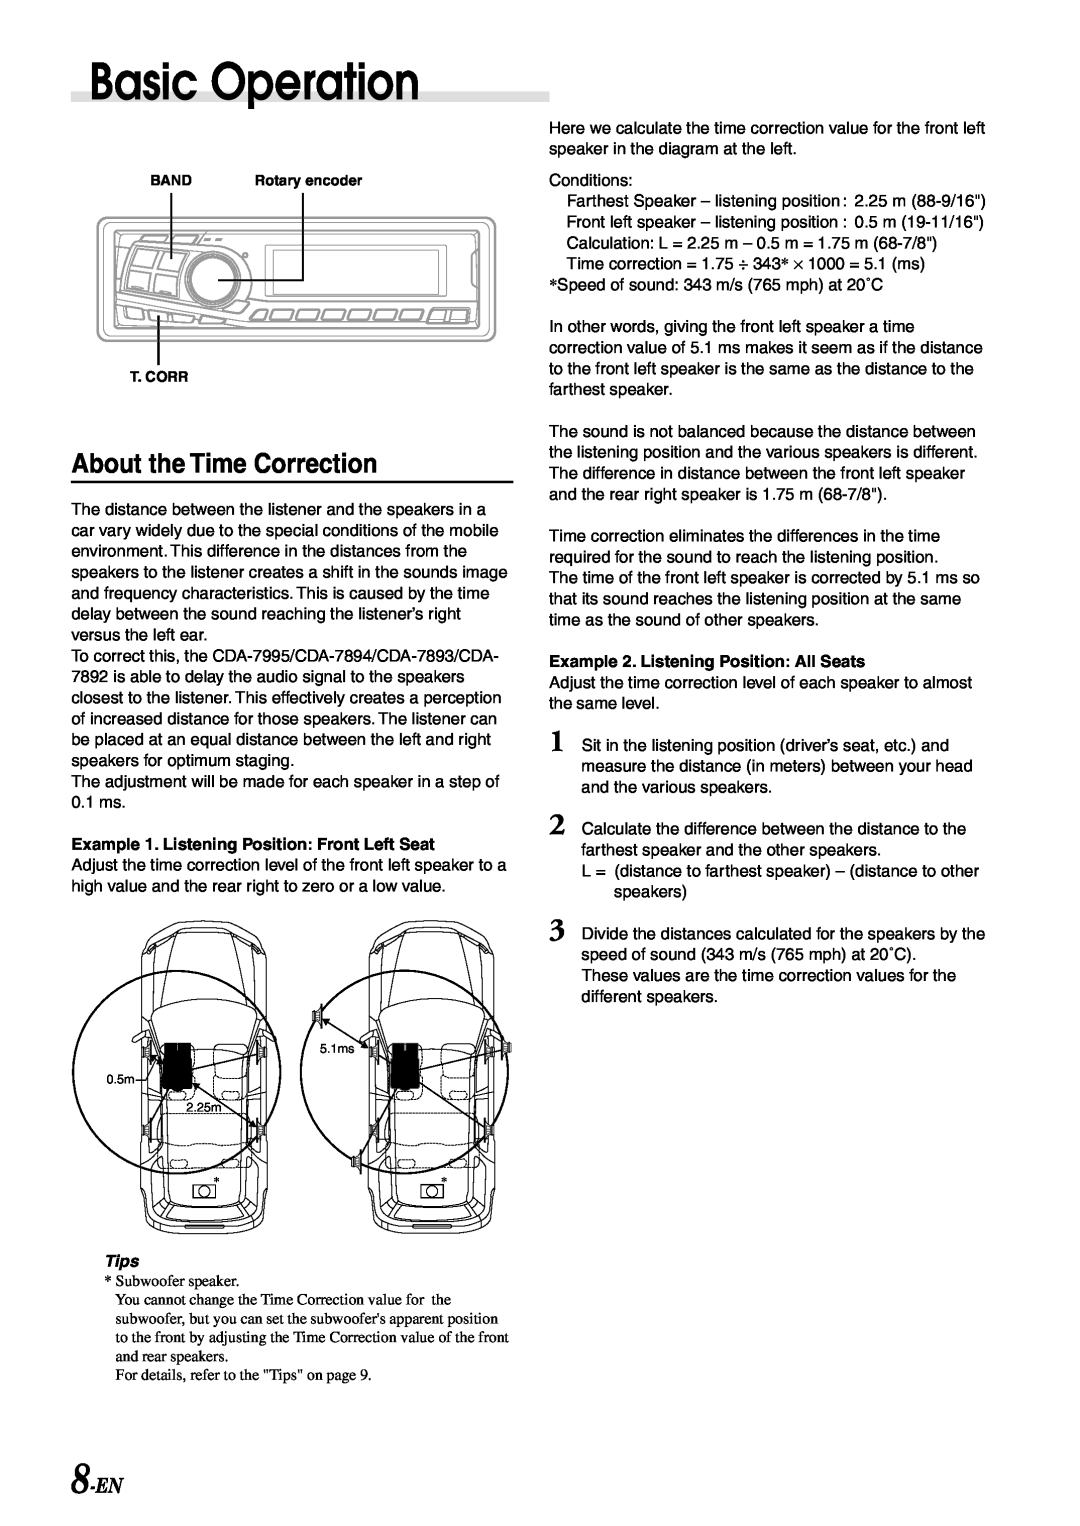 Alpine CDA-7893, CDA-7894, CDA-7892 owner manual About the Time Correction, 8-EN, Basic Operation, Tips 